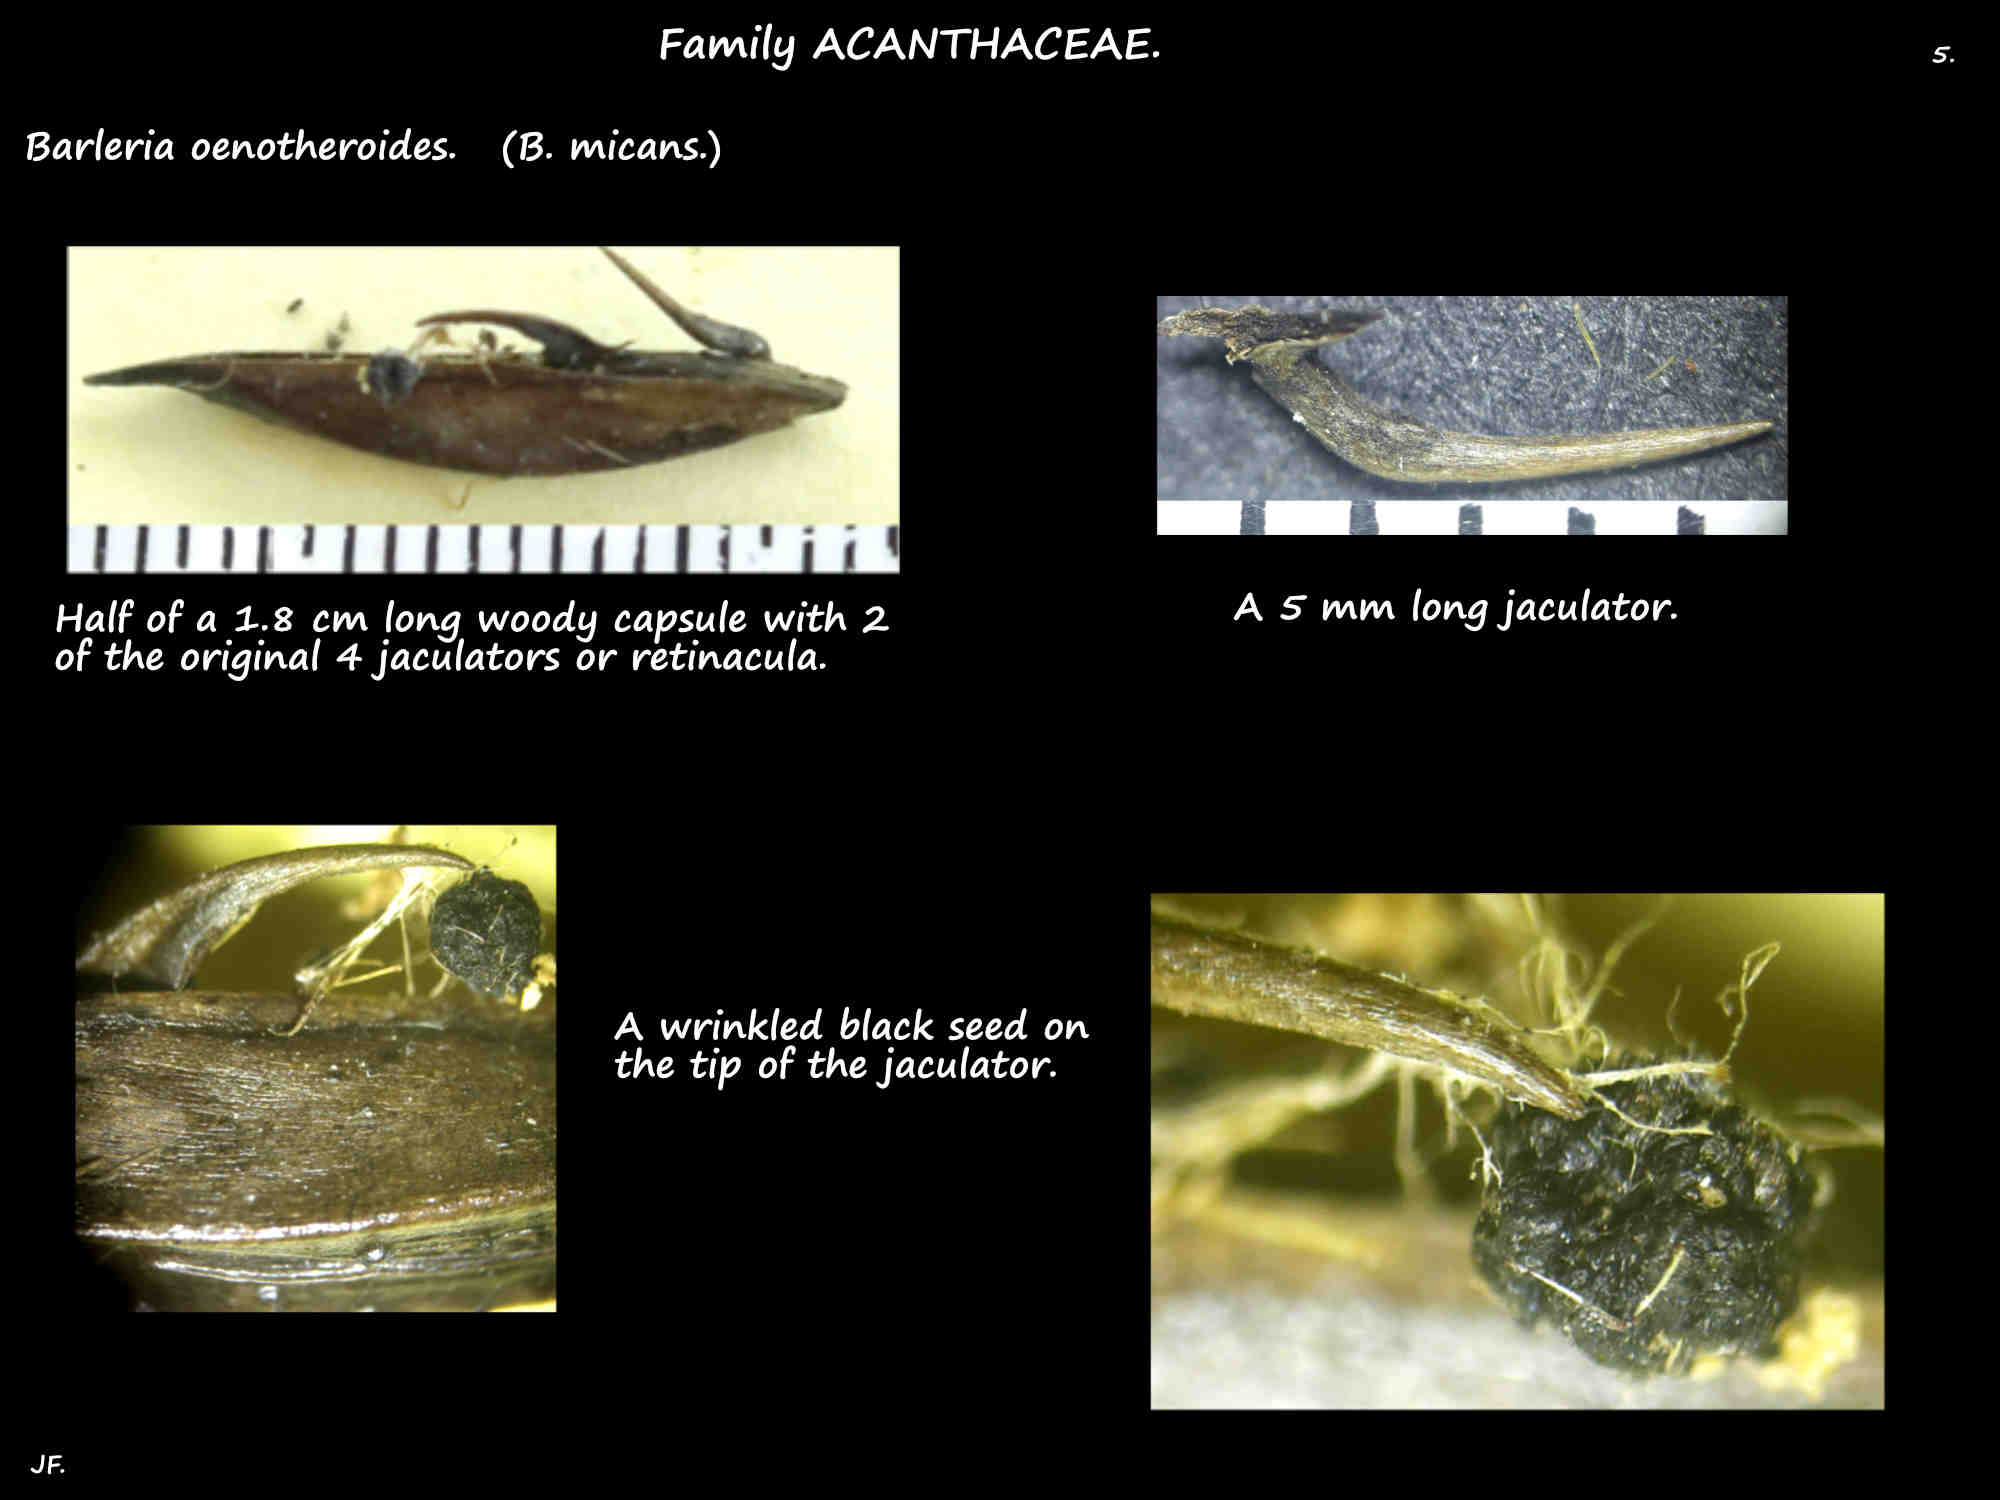 5 Seed & jaculators of Barleria oenotheroides capsules